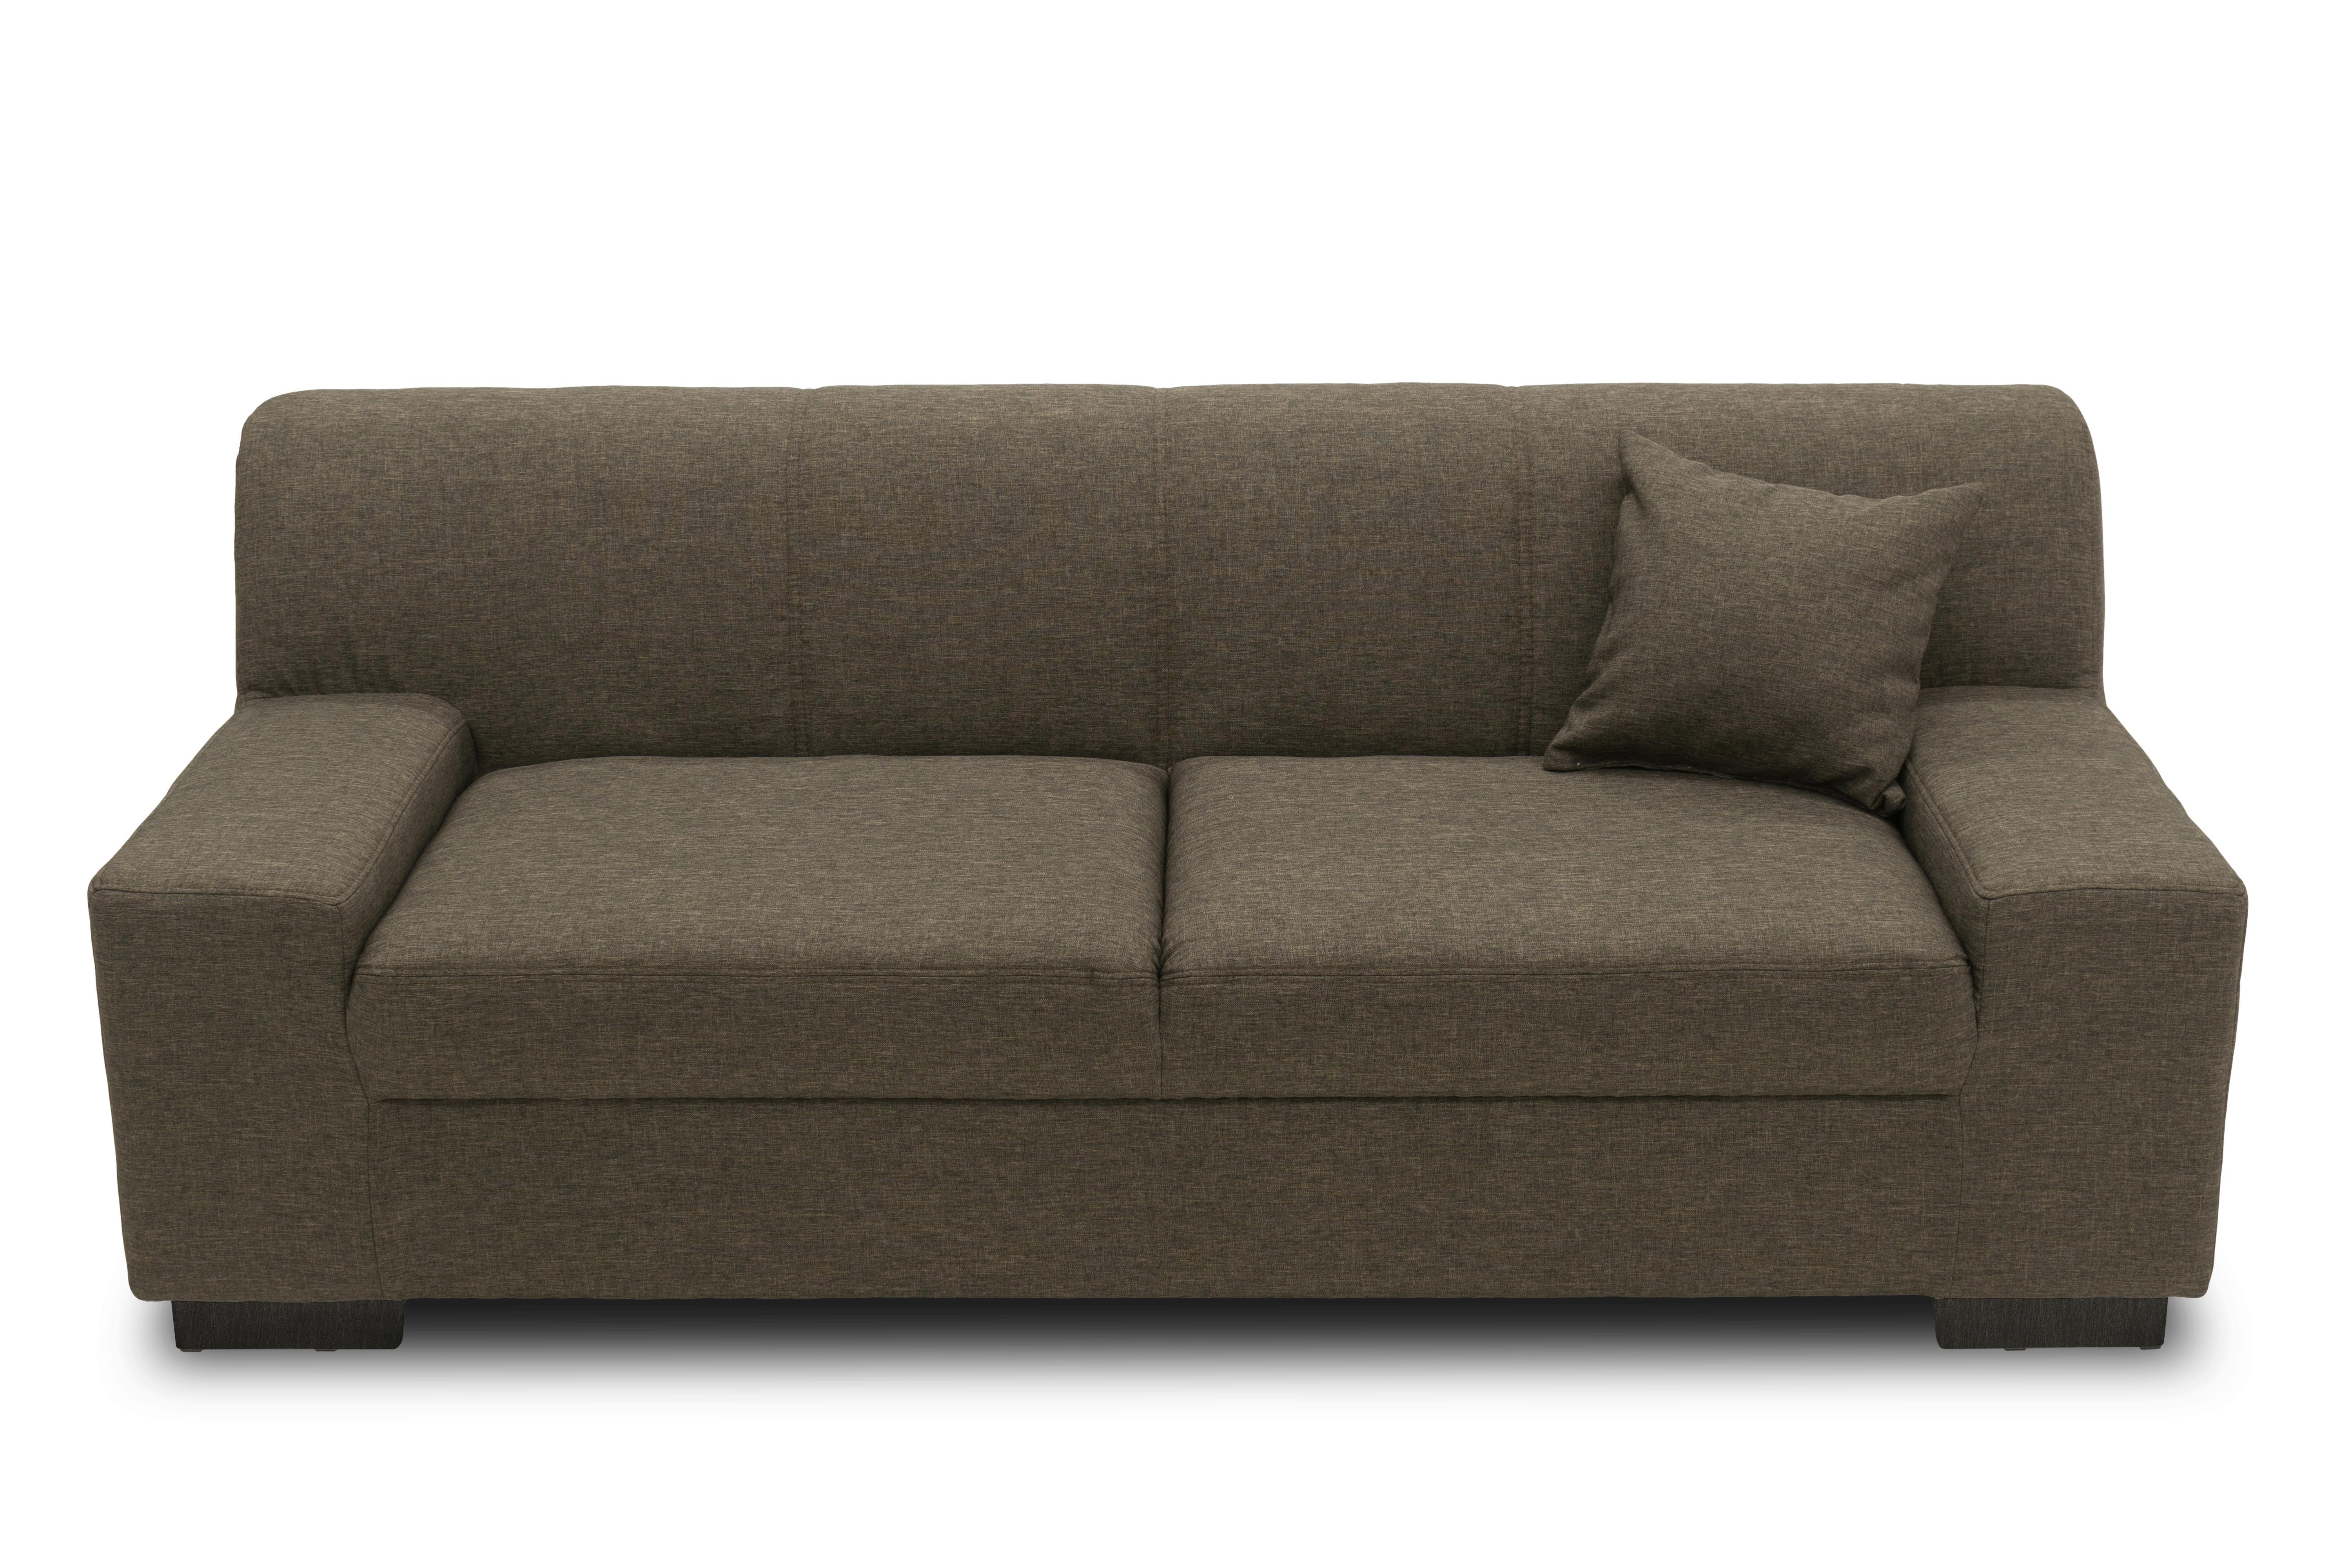 2-Sitzer-Sofa Norma Grau/Braun Webstoff - Wengefarben/Graubraun, Design, Textil (194/74/85cm) - MID.YOU